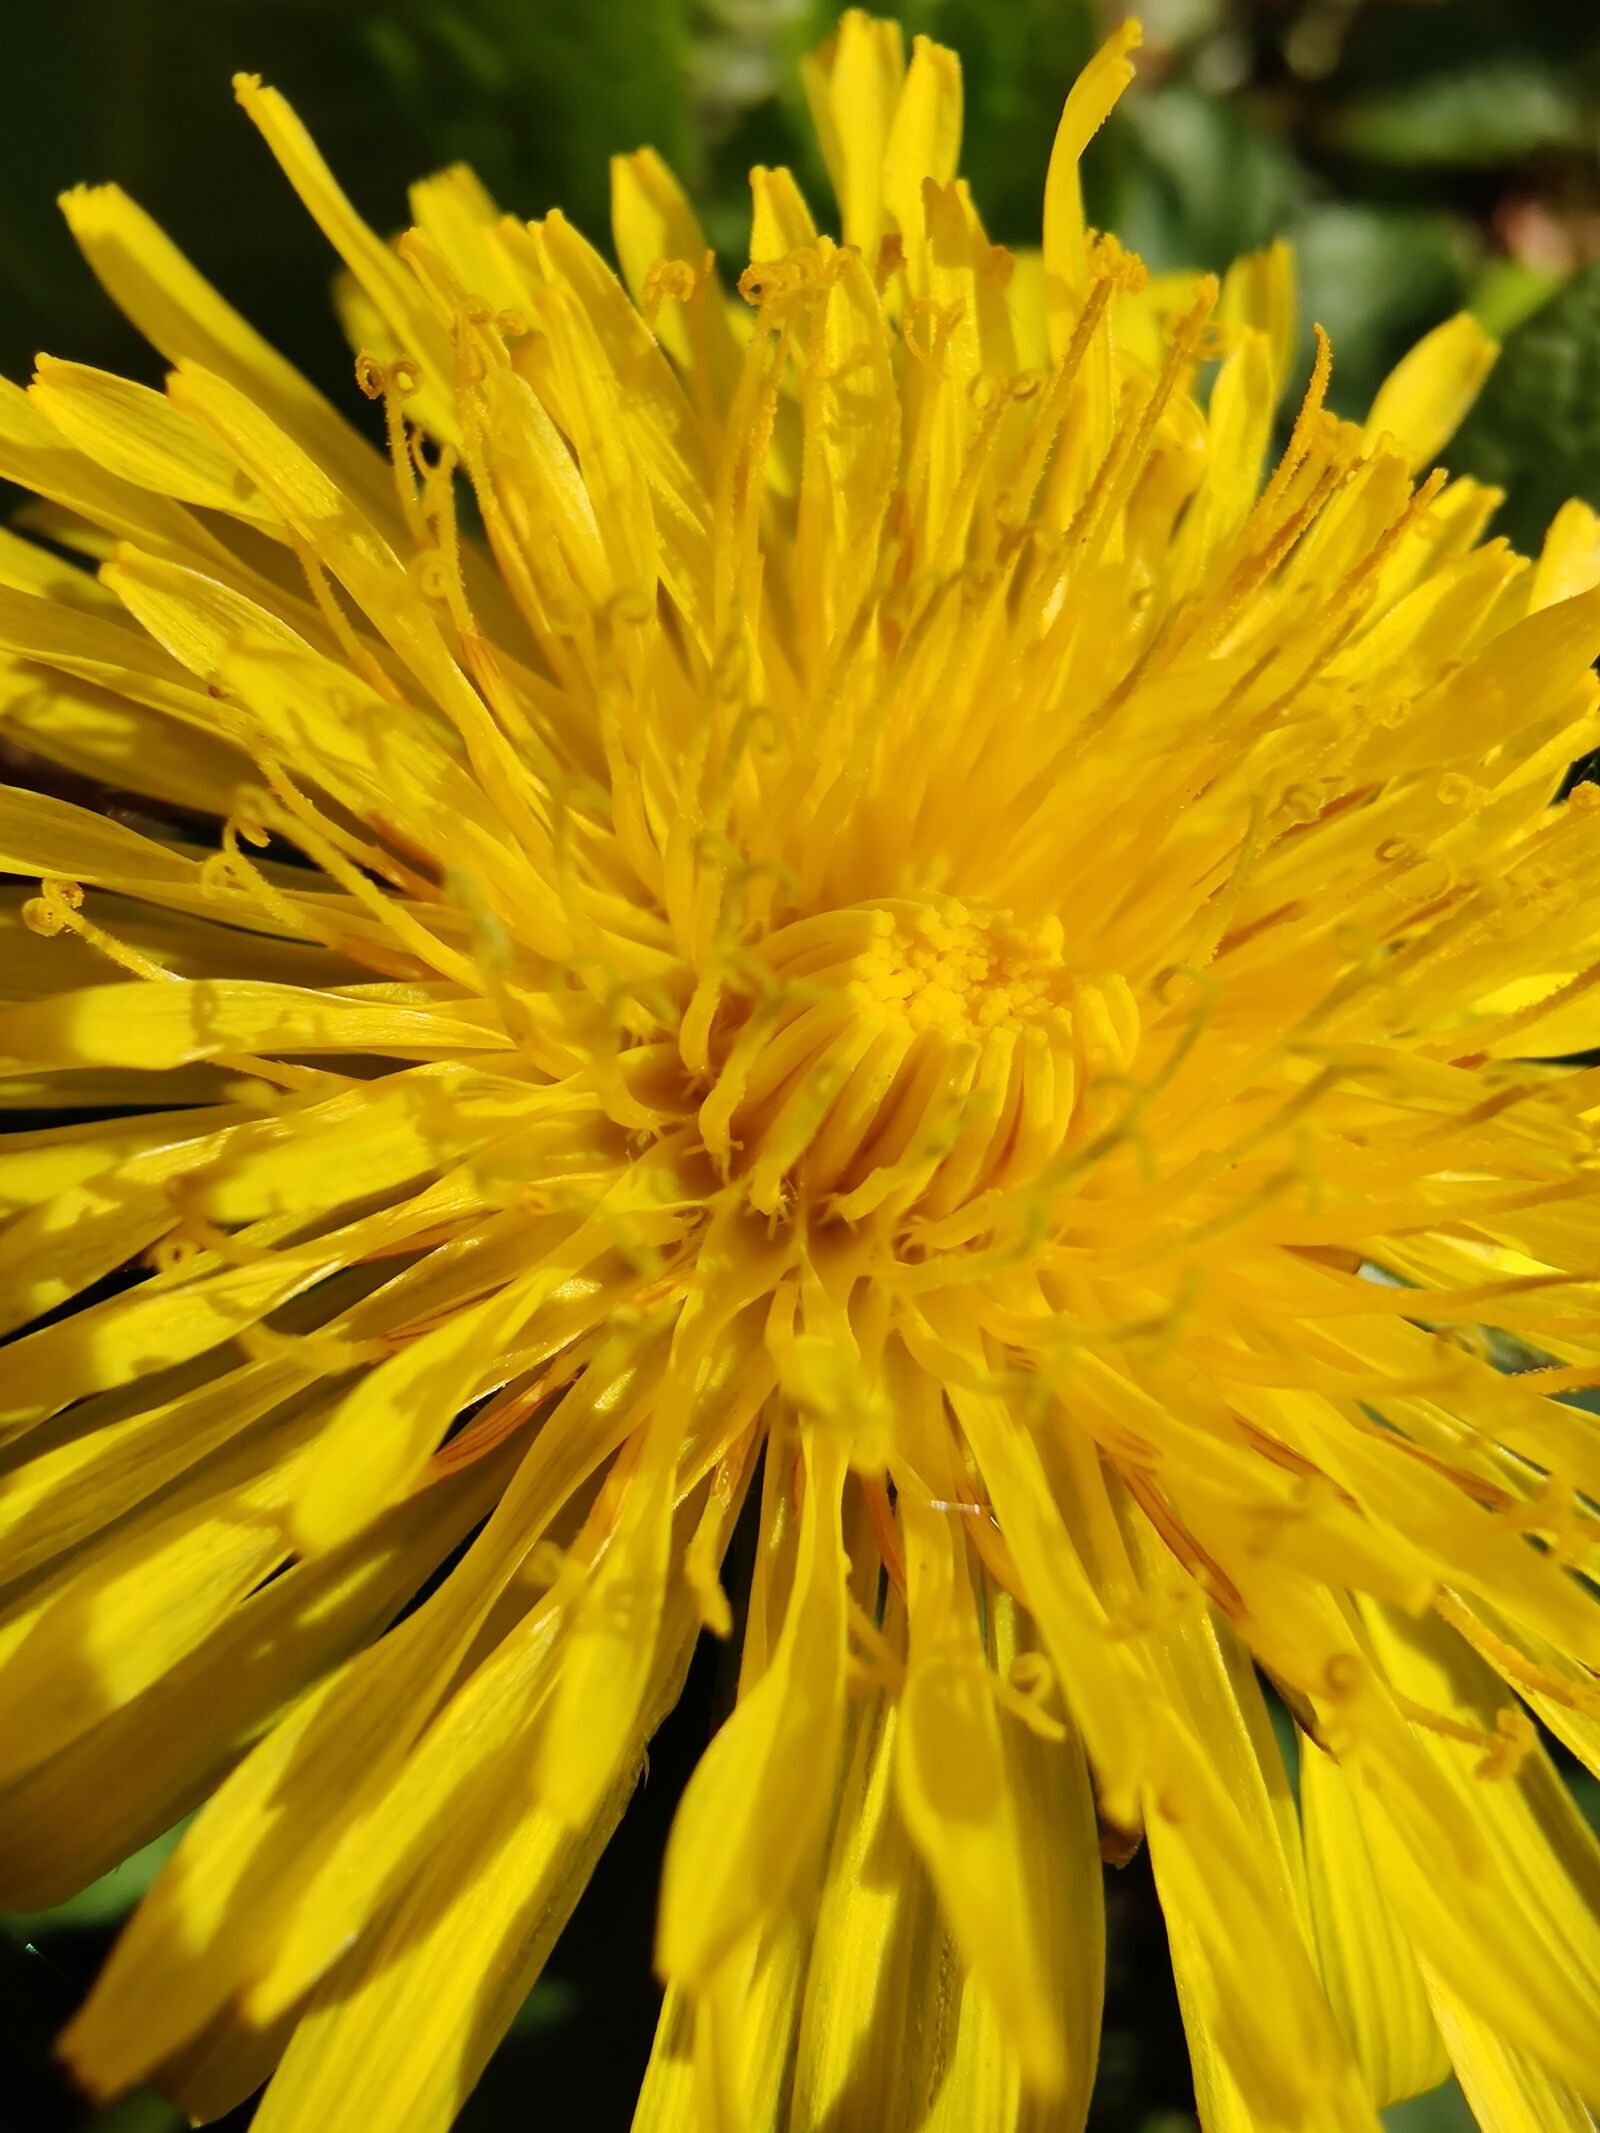 OnePlus HD1903 sample photo. Dandelion, grass, garden photography